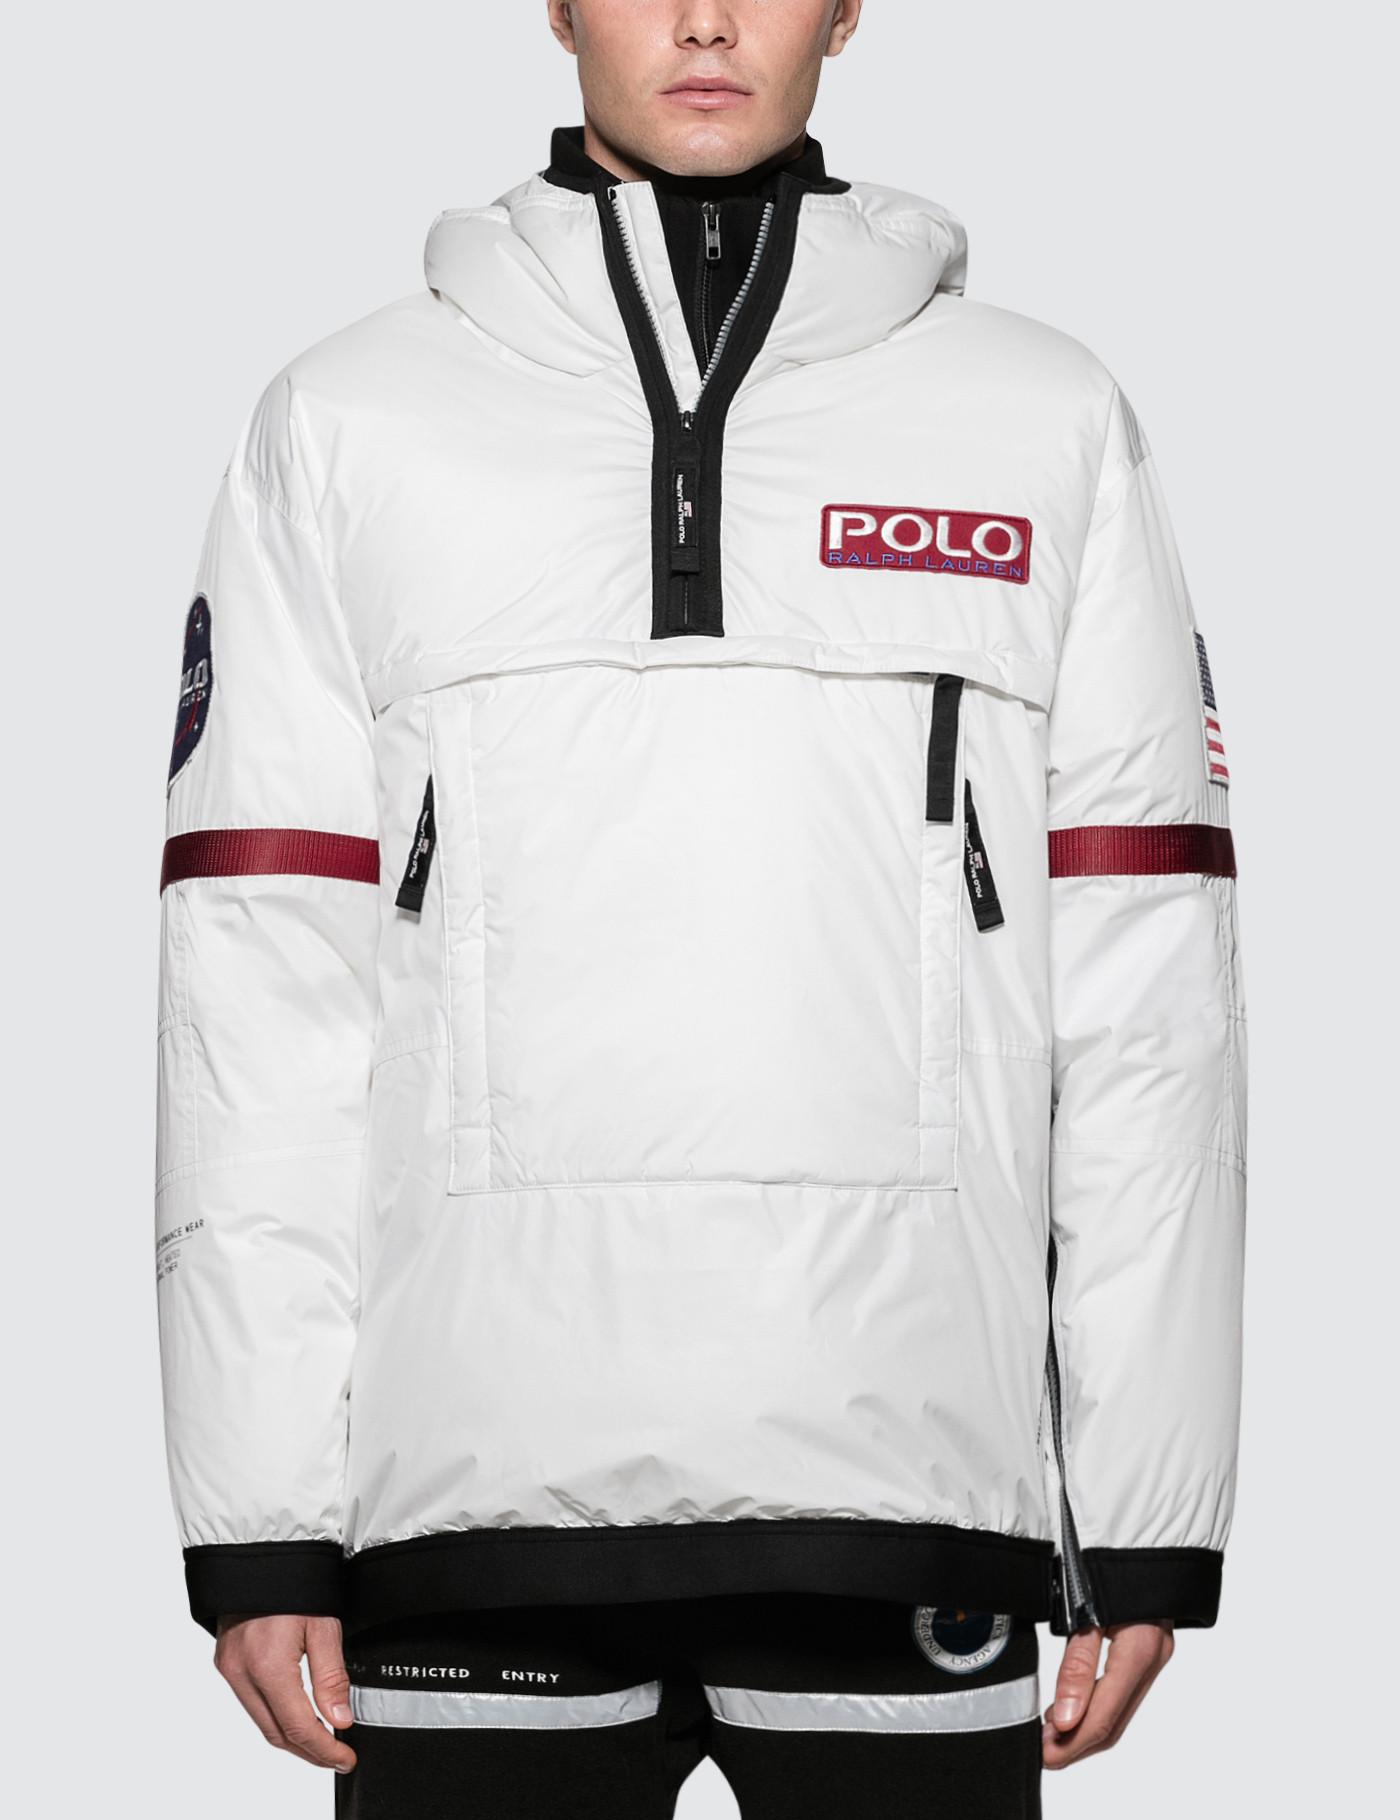 polo 11 heated jacket price